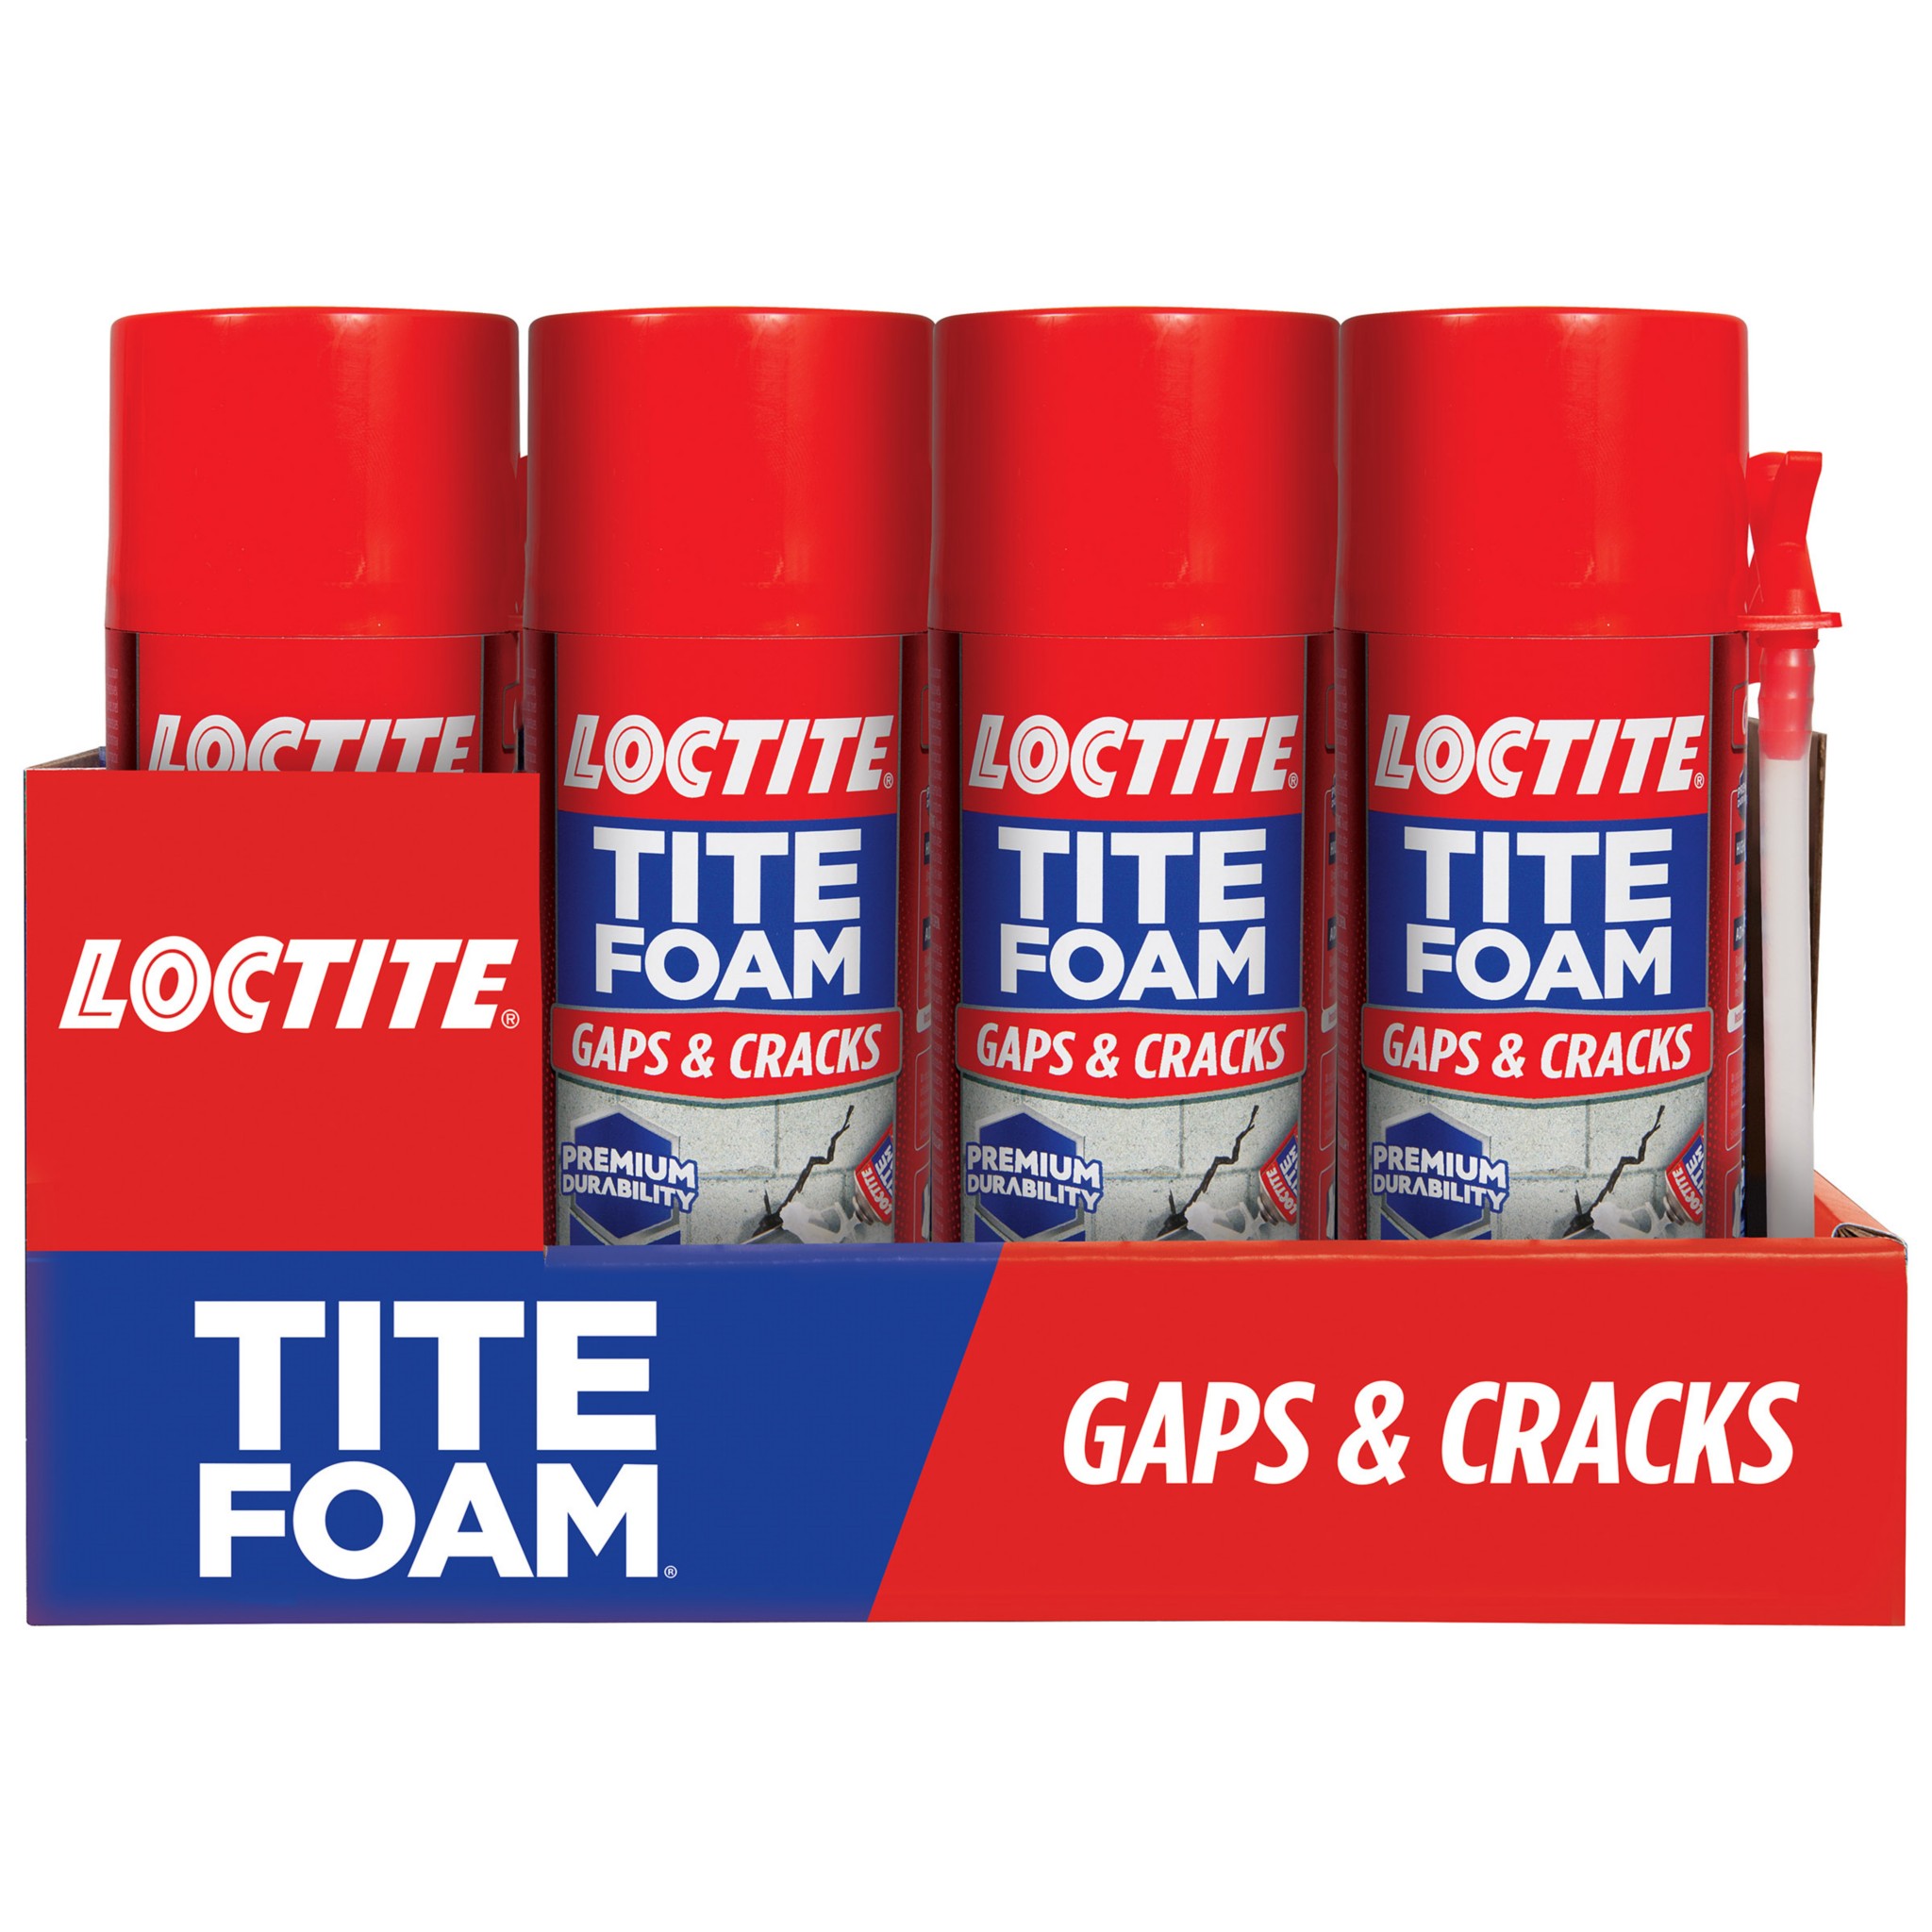 GREAT STUFF - Gaps And Cracks Insulating Foam Sealant 12 oz